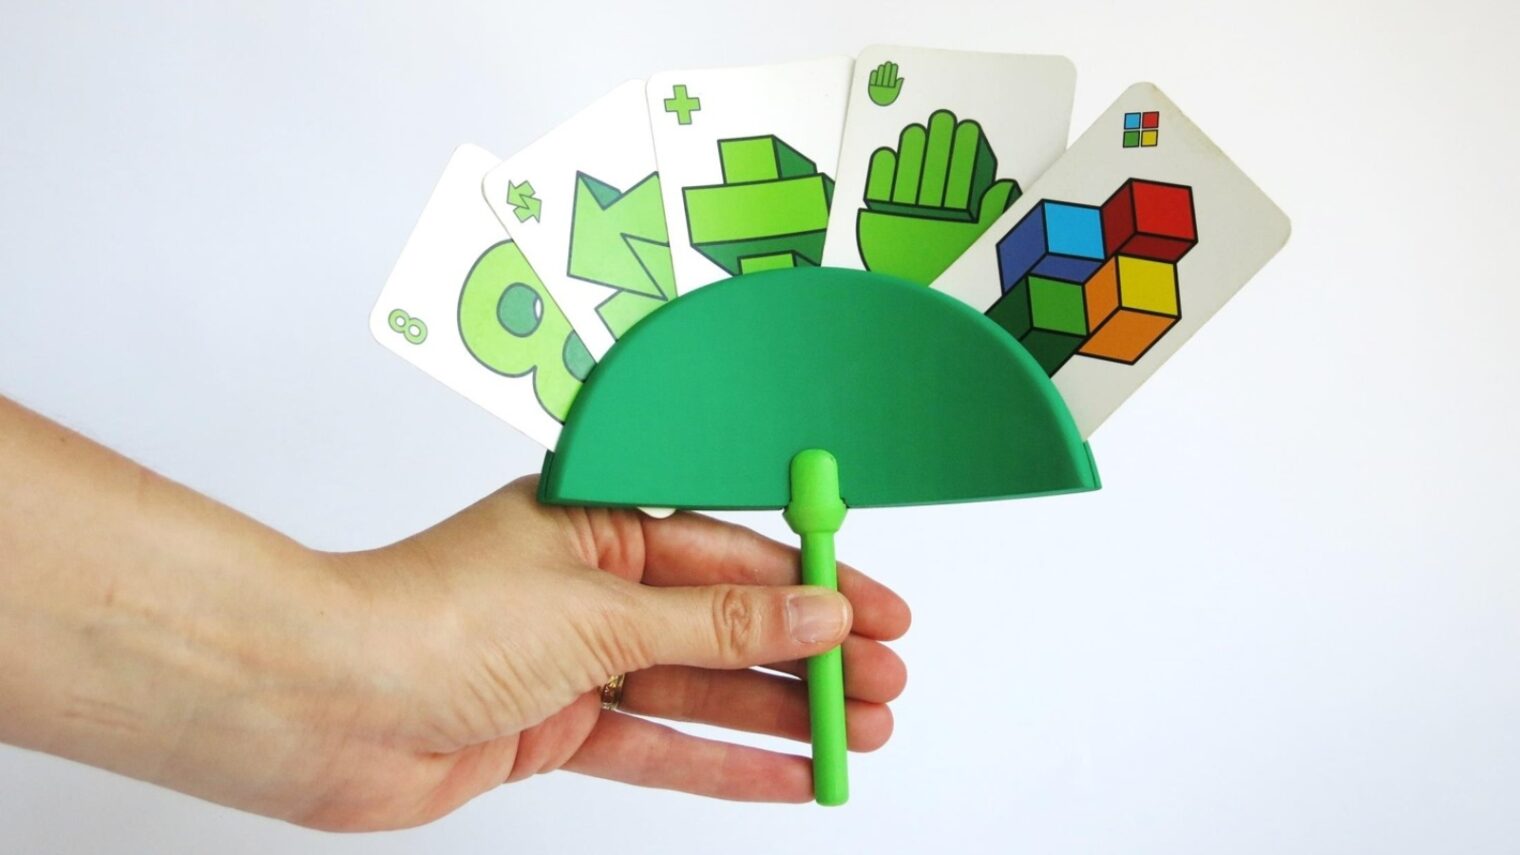 Shaul Cohen designed this 3D-printed cardholder to make games easier for children. Photo: courtesy